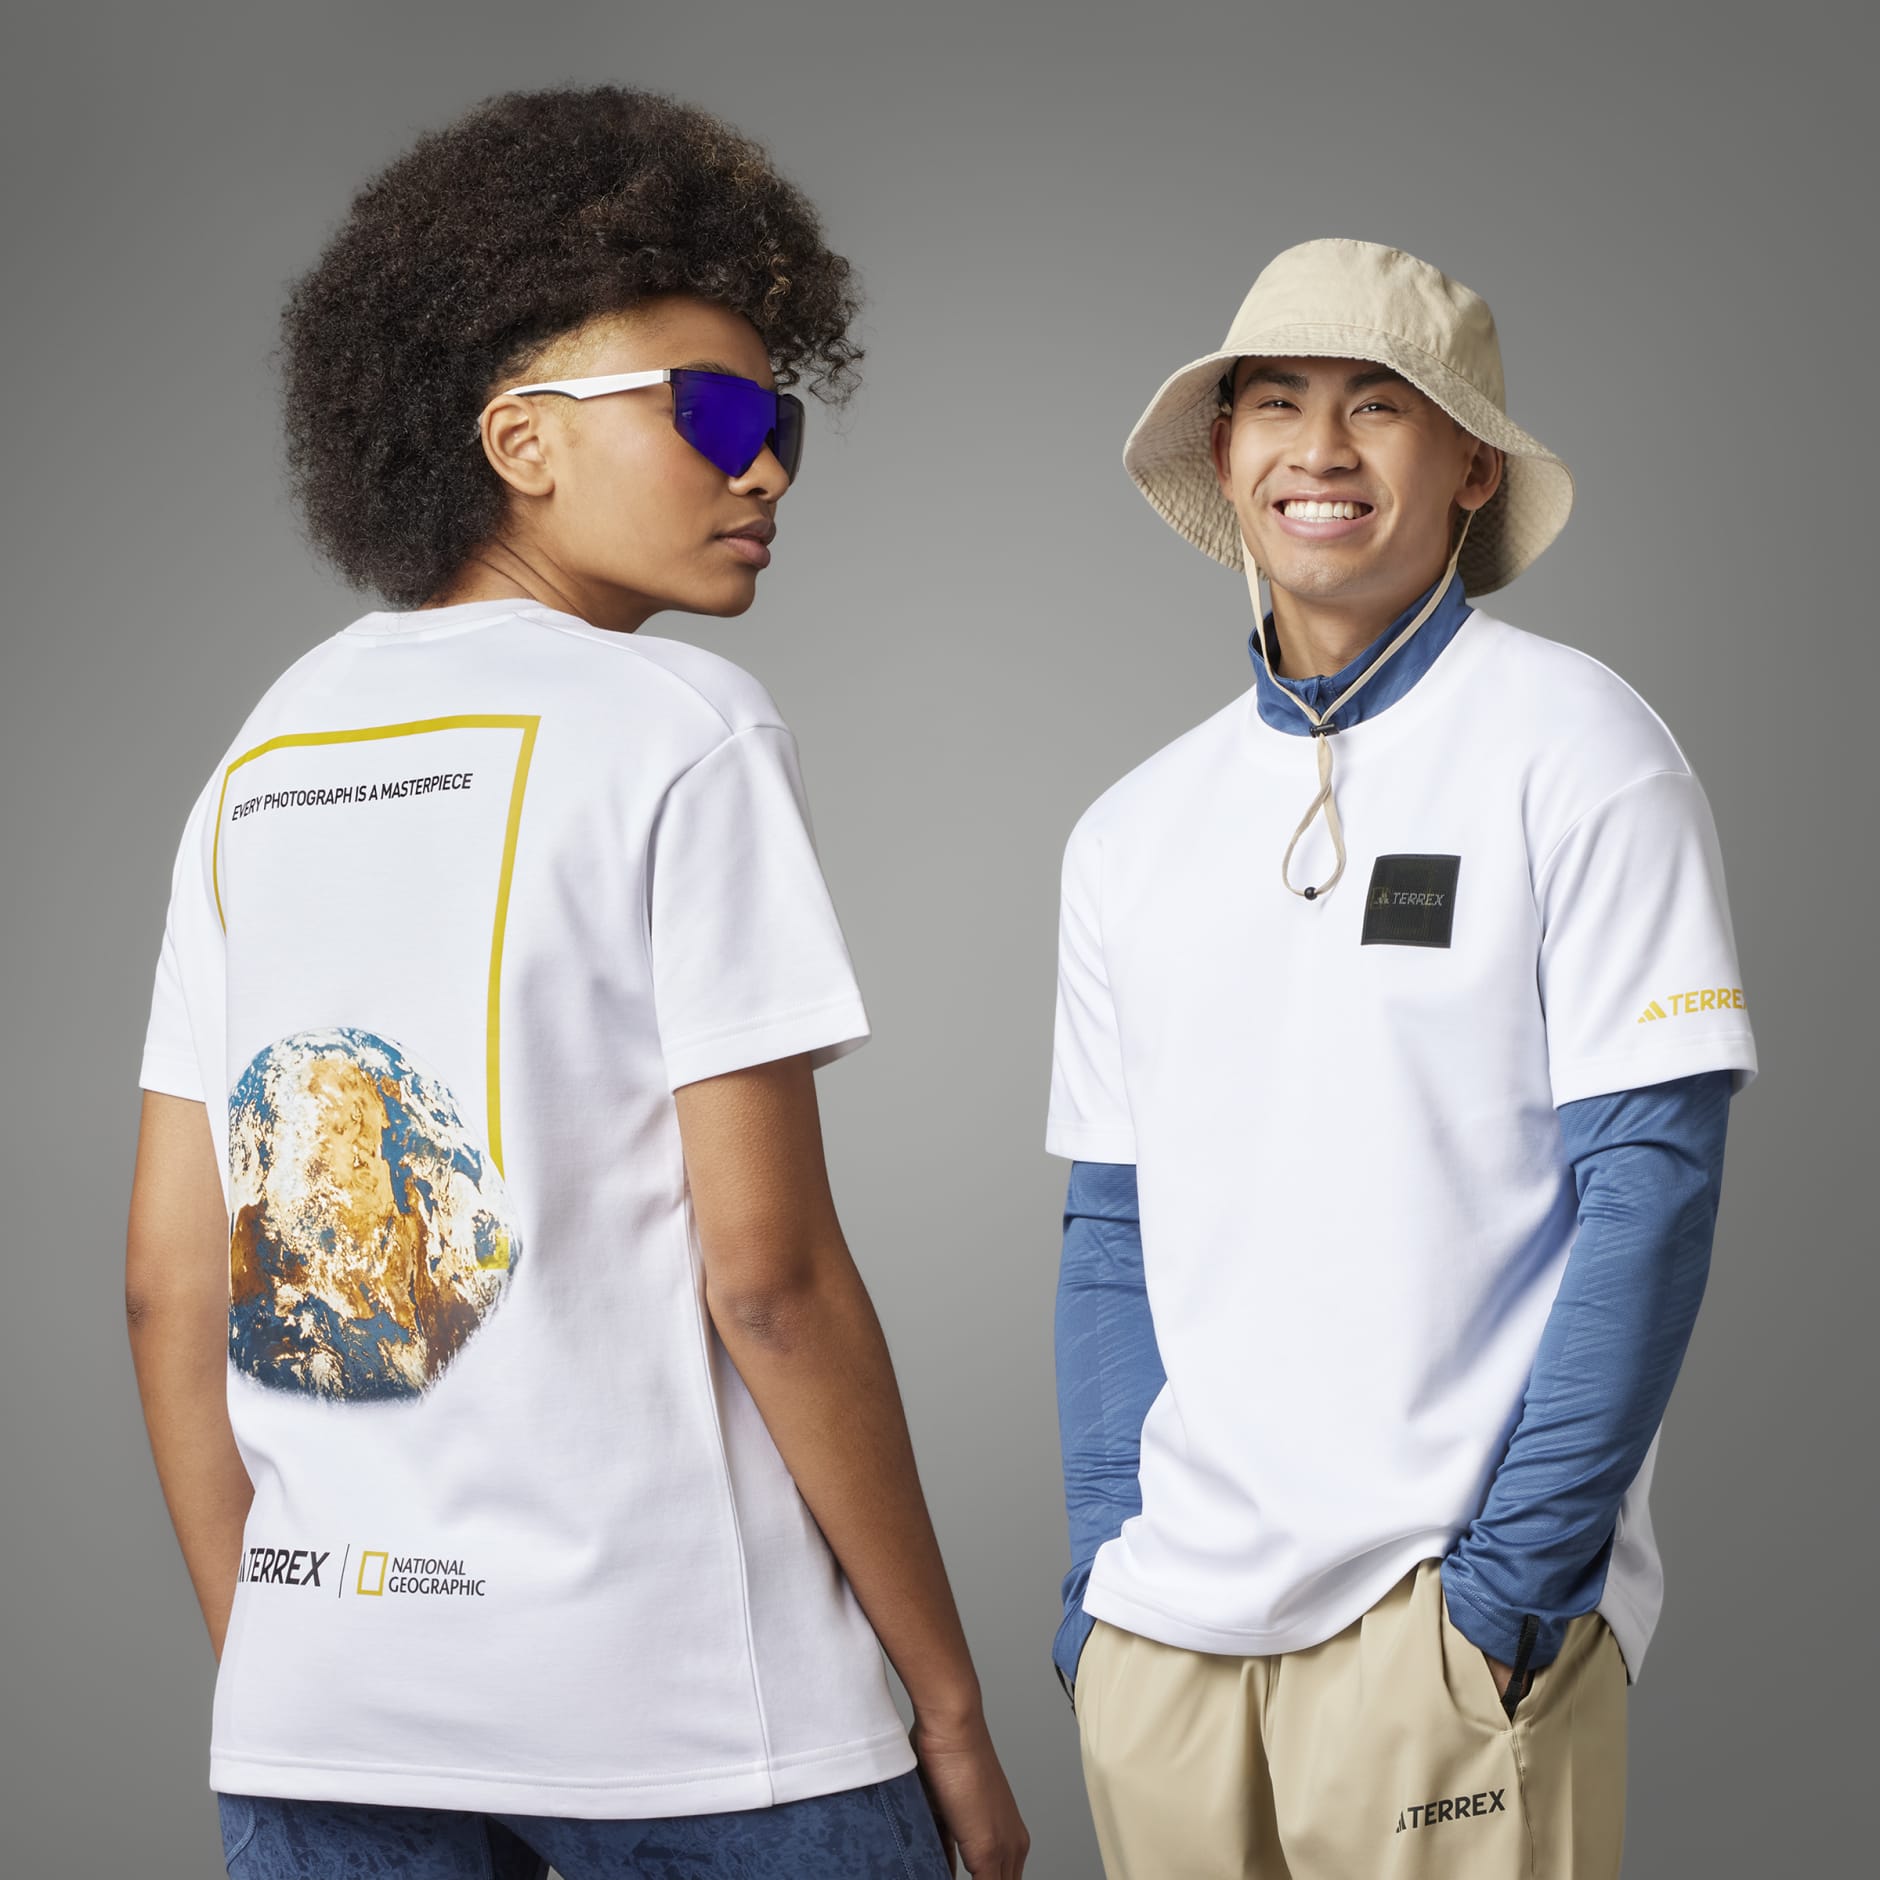 adidas Tropical Sports Graphic Short Sleeve T-Shirt White